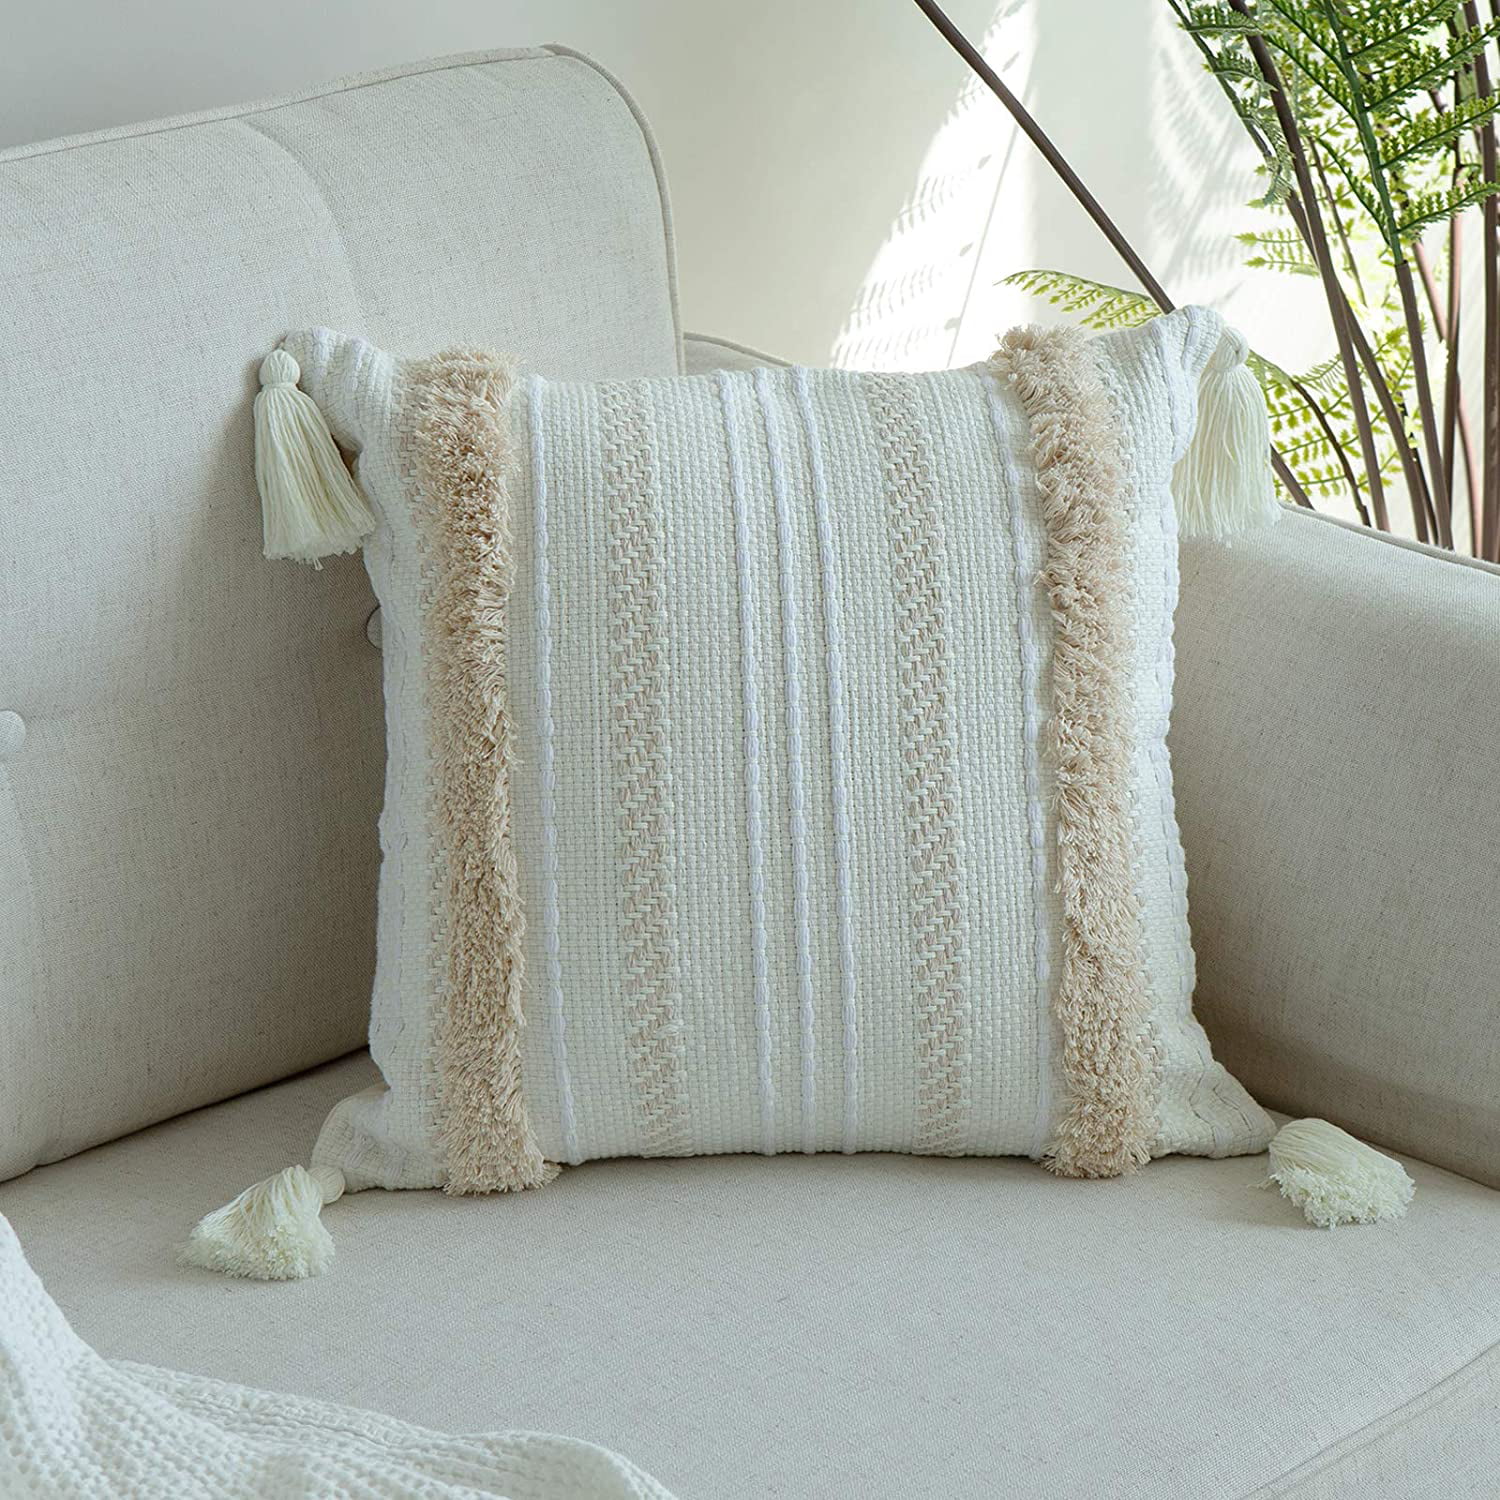 Boho Throw Pillow Covers 18x18 Neutral Tufted Decorative Pillows